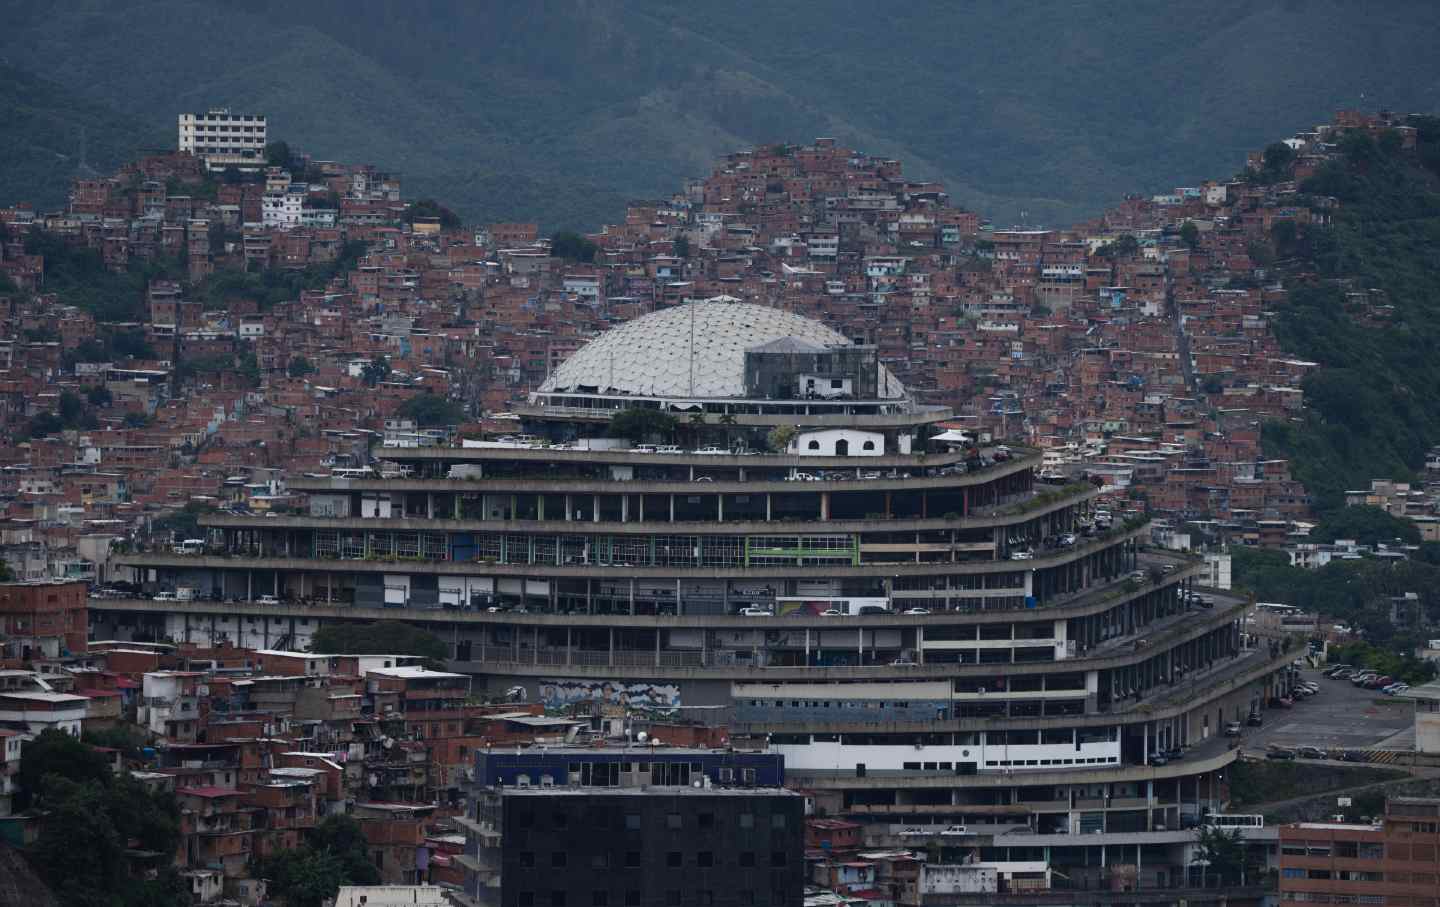 Venezuela's National Intelligence Service headquarters in Caracas, Venezuela.